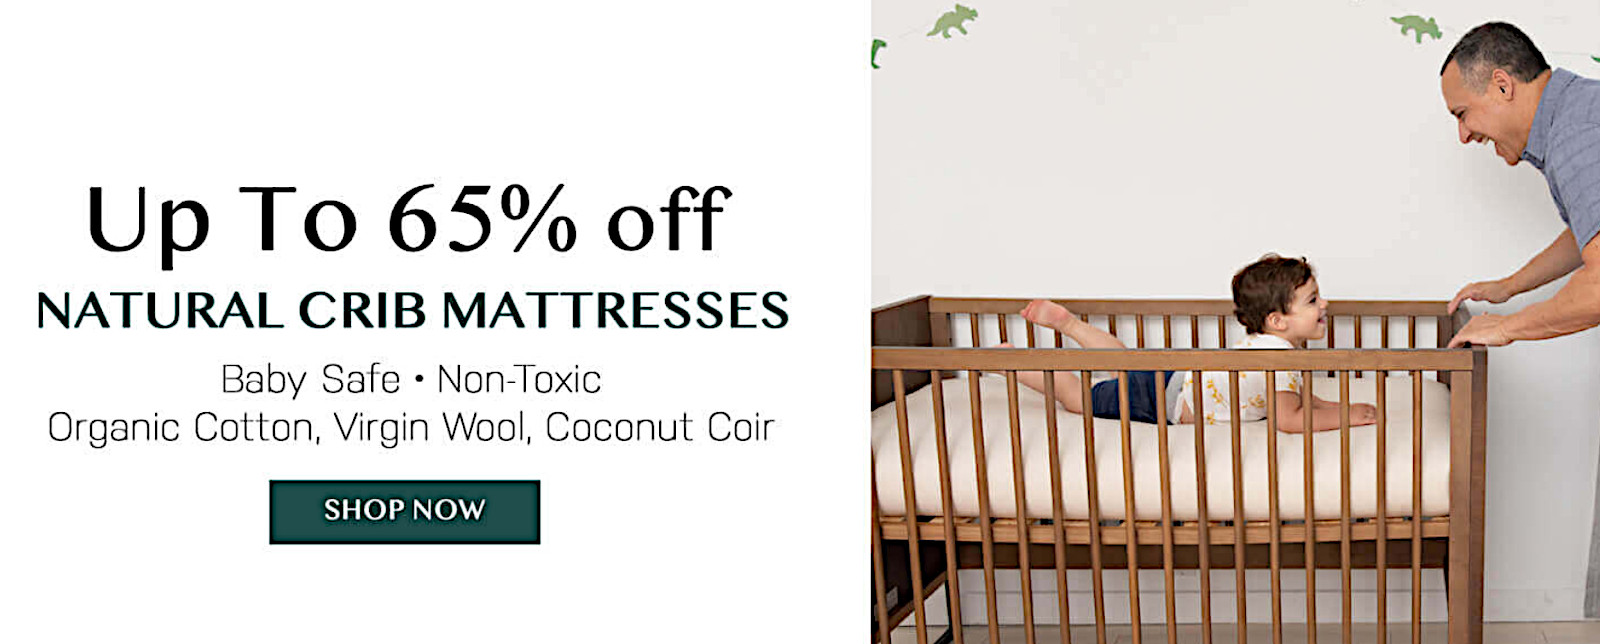 Clearance natural crib mattresses